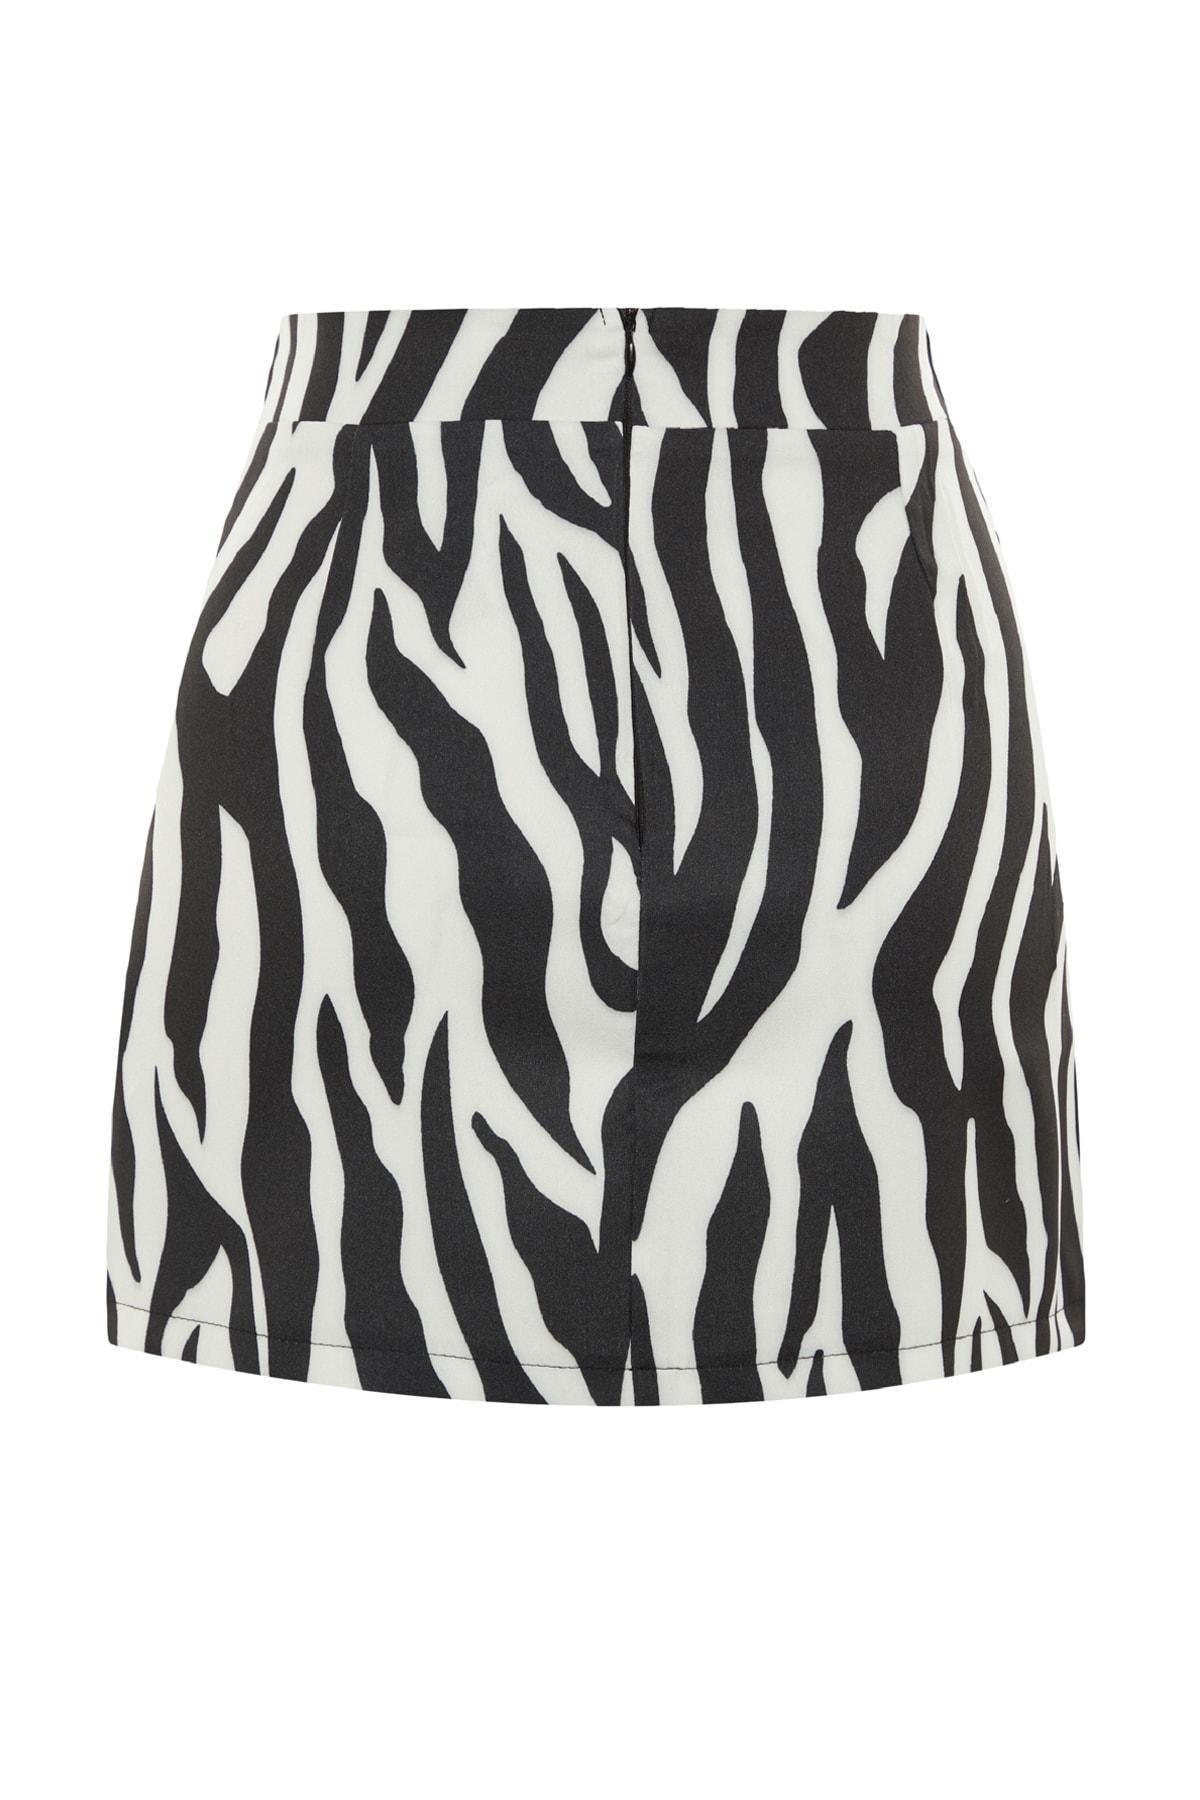 Trendyol - Black Animal Print Mini Skirt